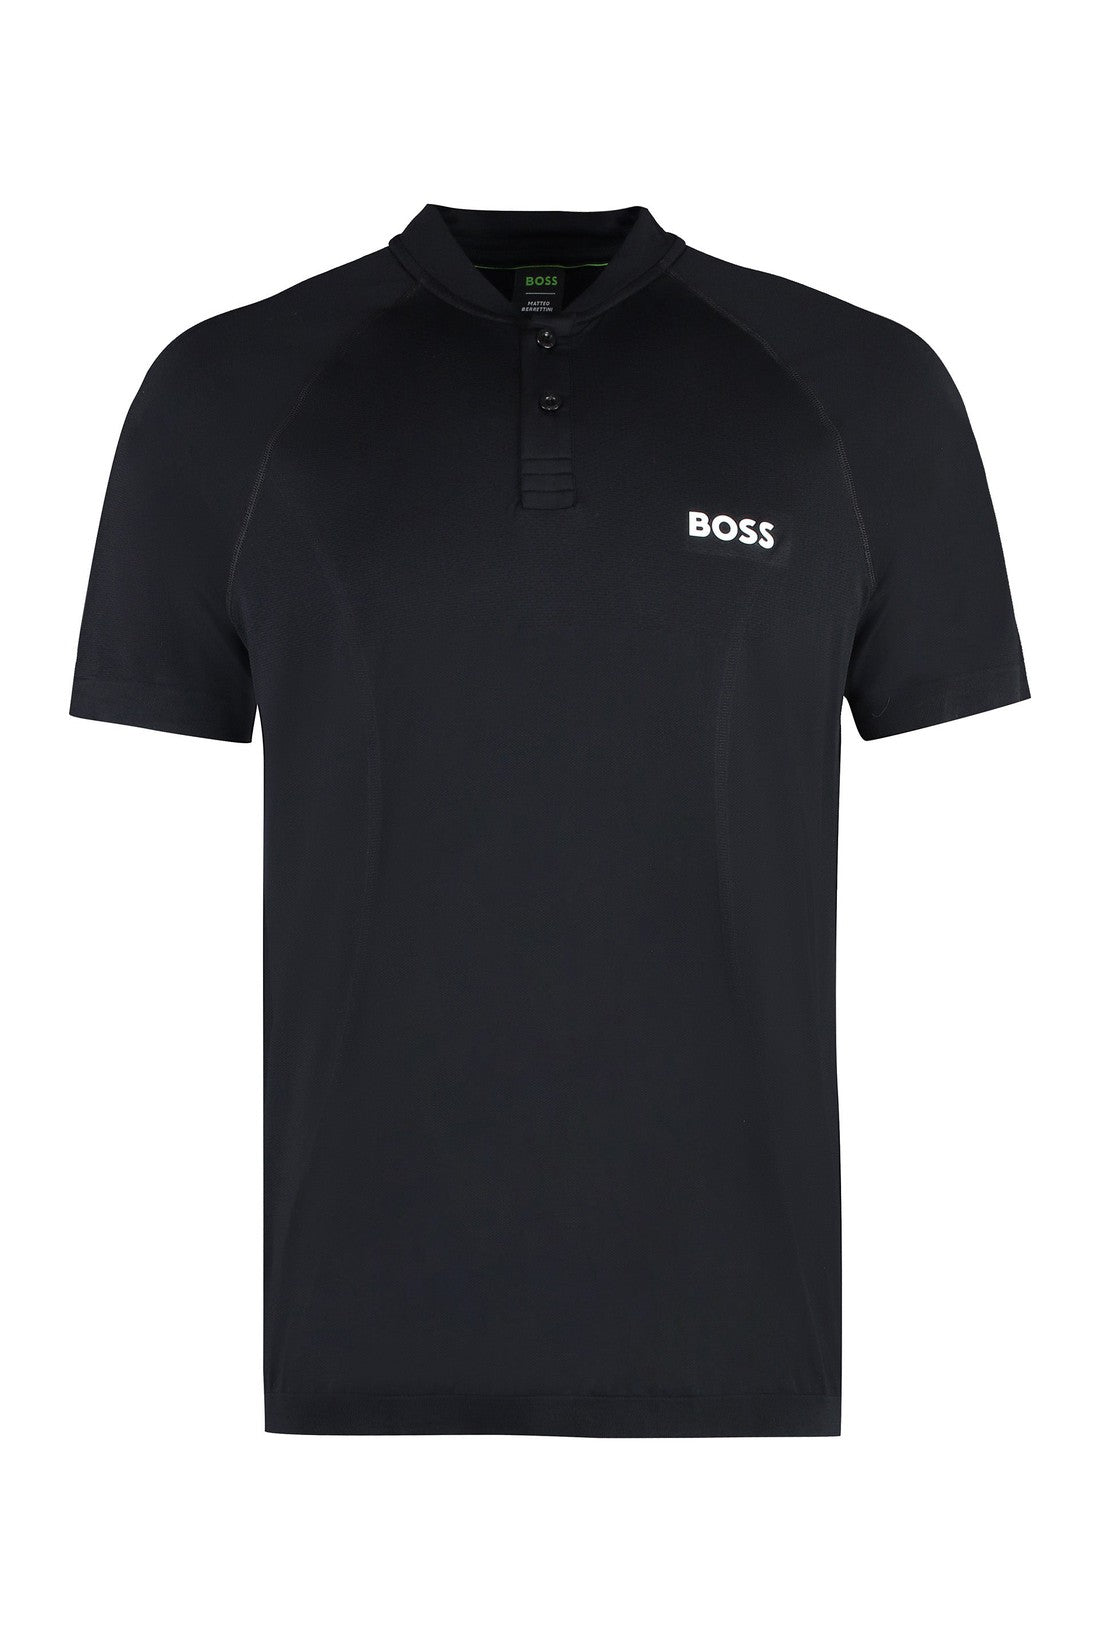 BOSS-OUTLET-SALE-BOSS X MATTEO BERRETTINI - Technical fabric polo shirt-ARCHIVIST